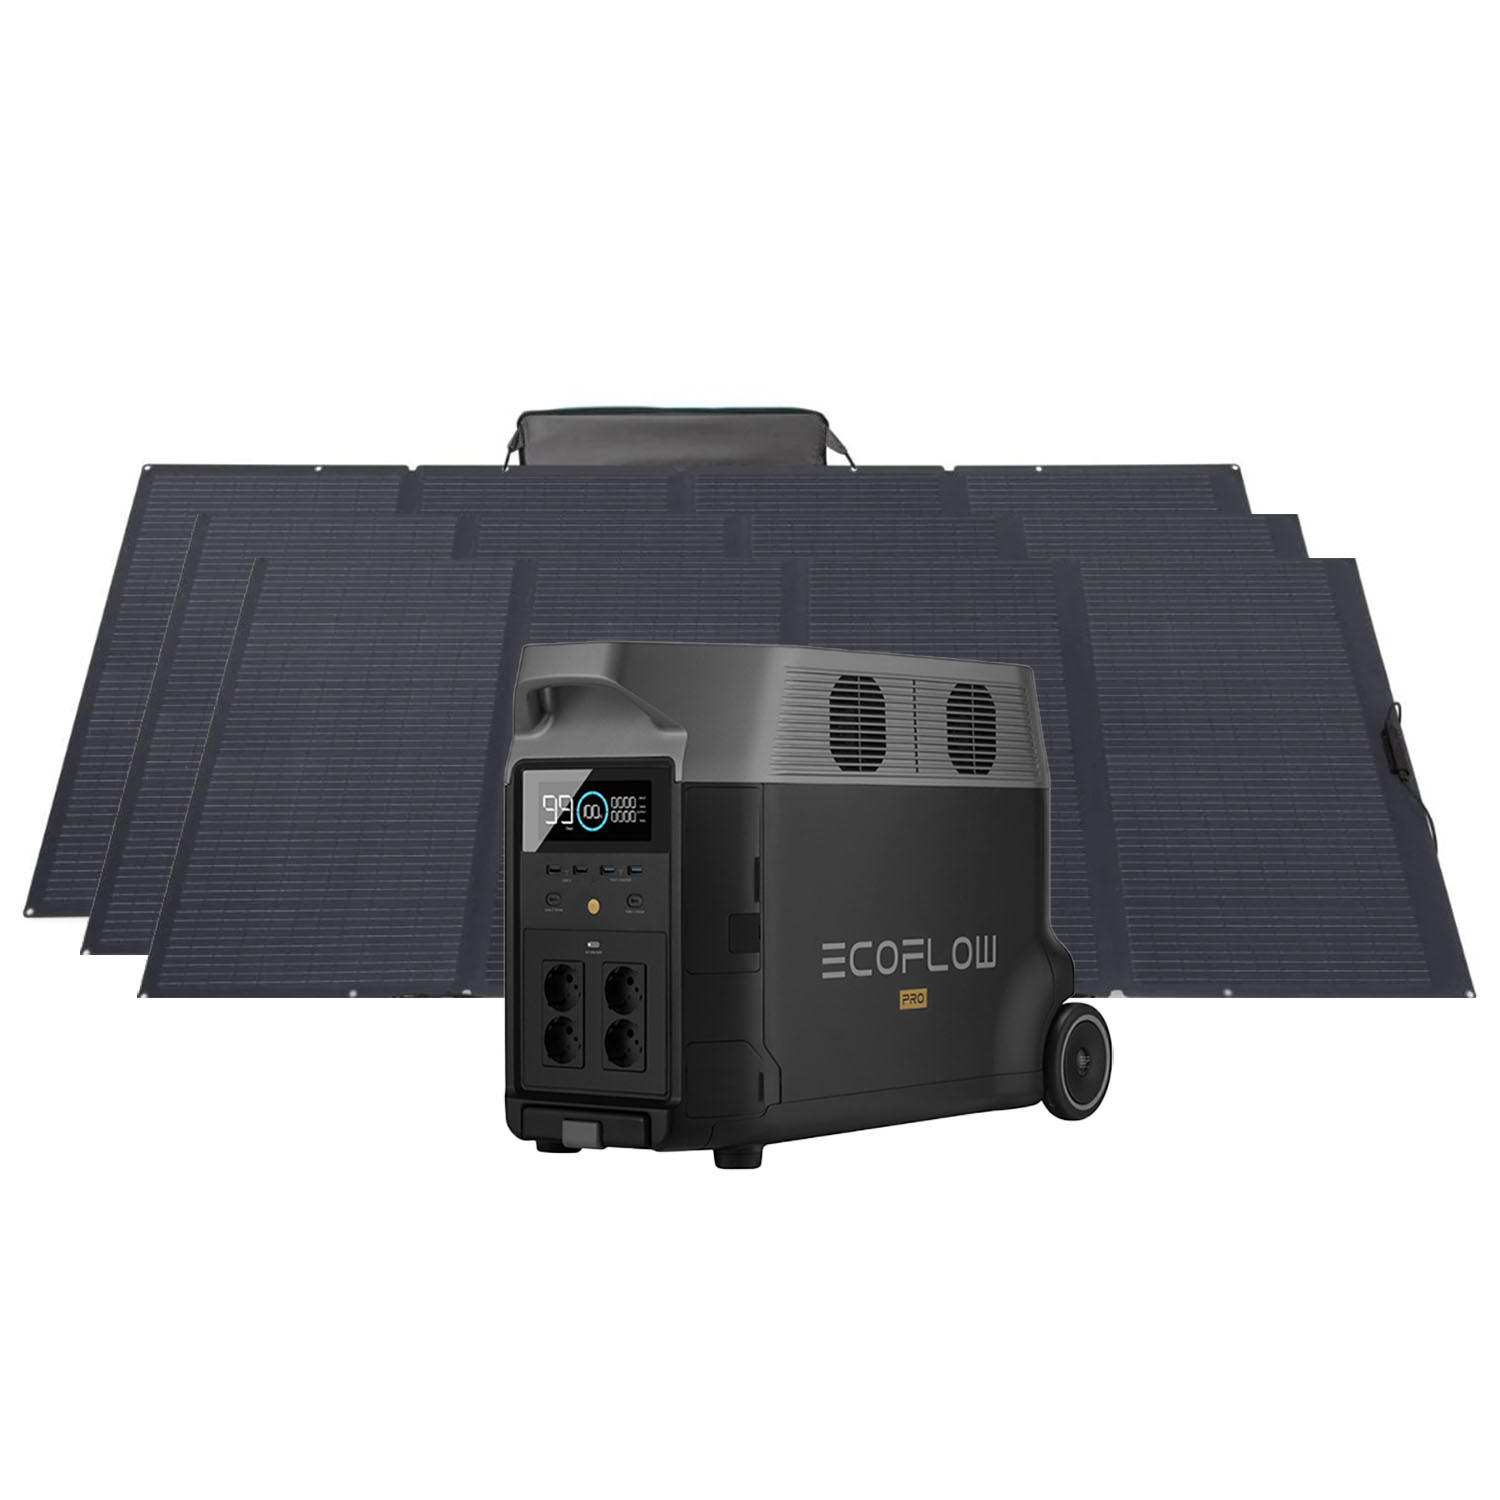 DELTA Pro-Set Powerstation inkl. 3 Solarpanel 400 W